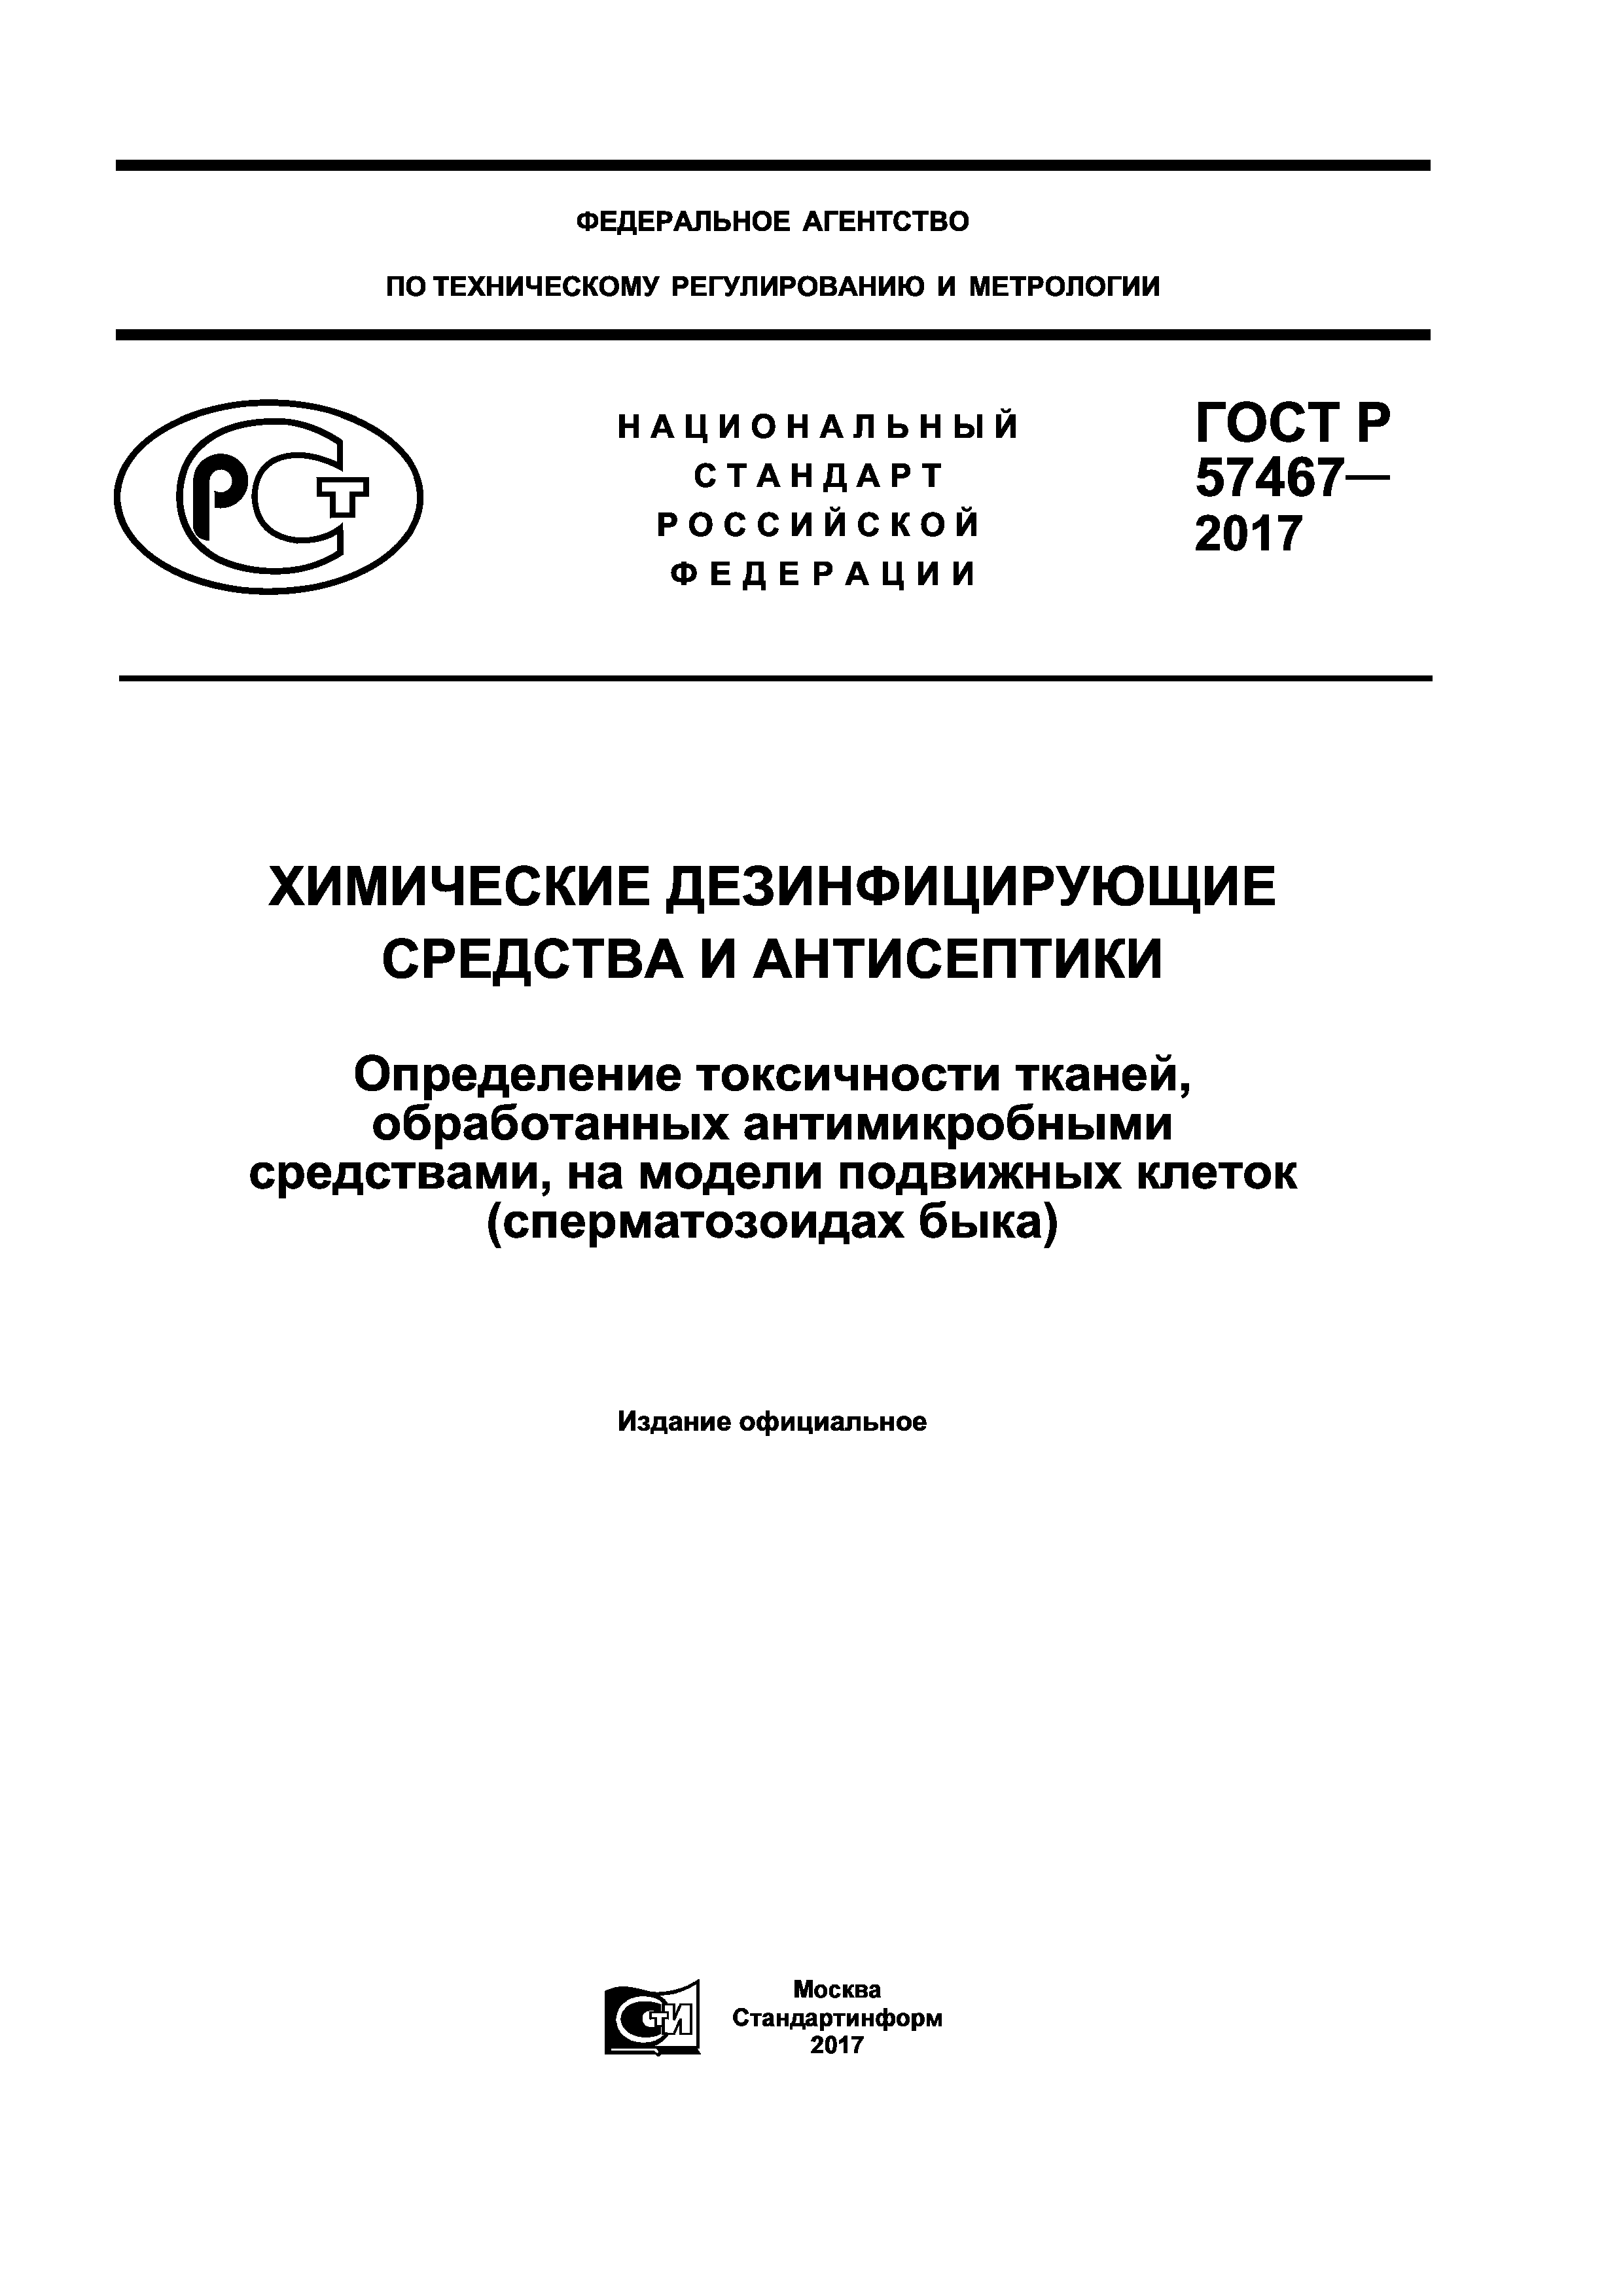 ГОСТ Р 57467-2017